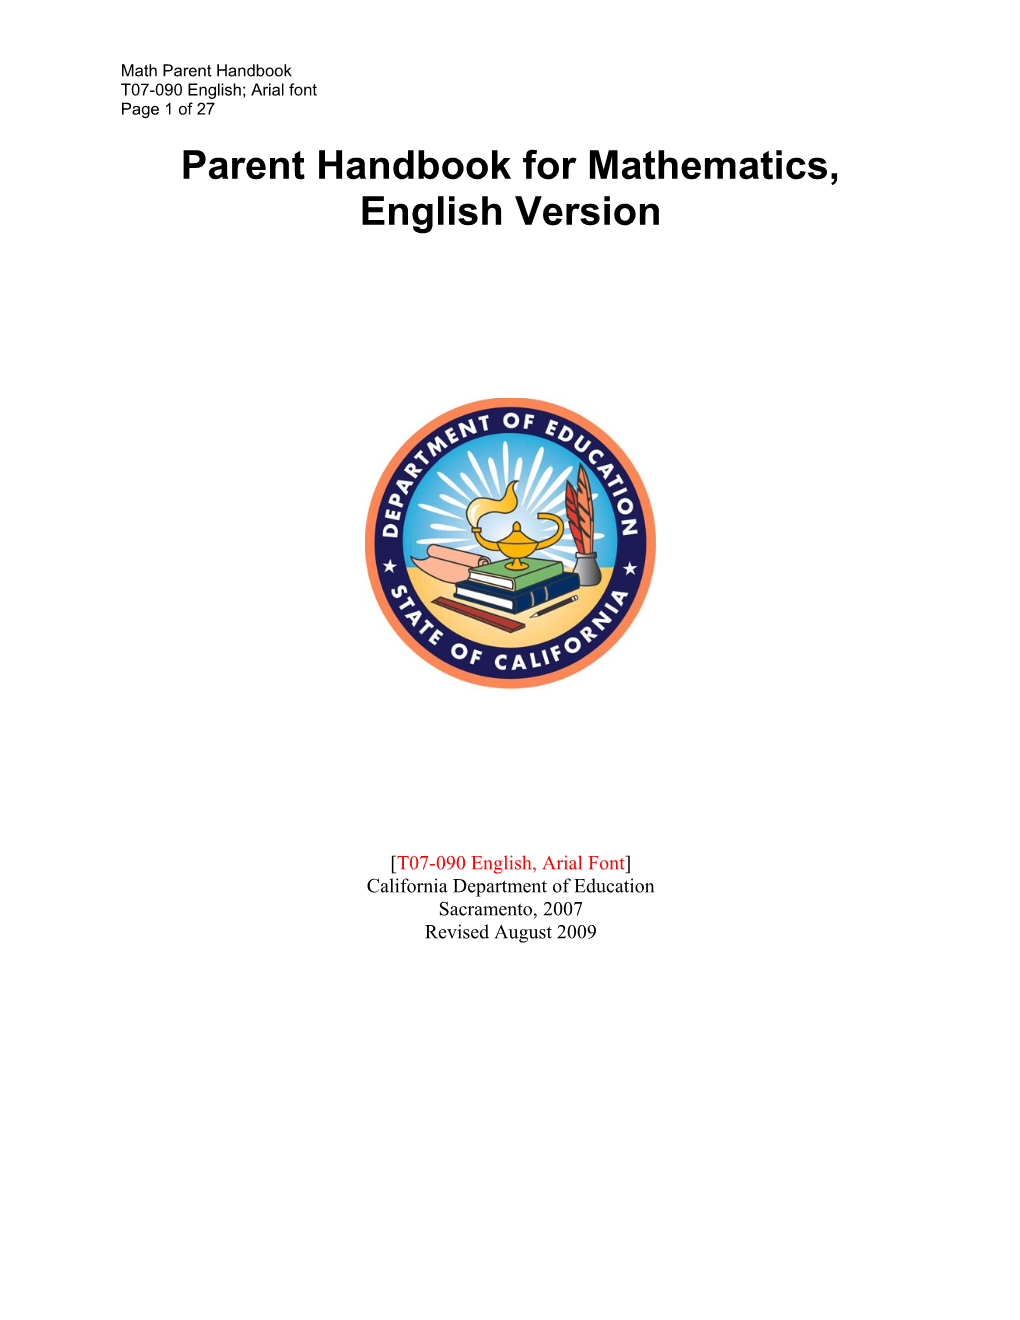 Parent Handbook for Math, English Version - Mathematics (CA Dept of Education)